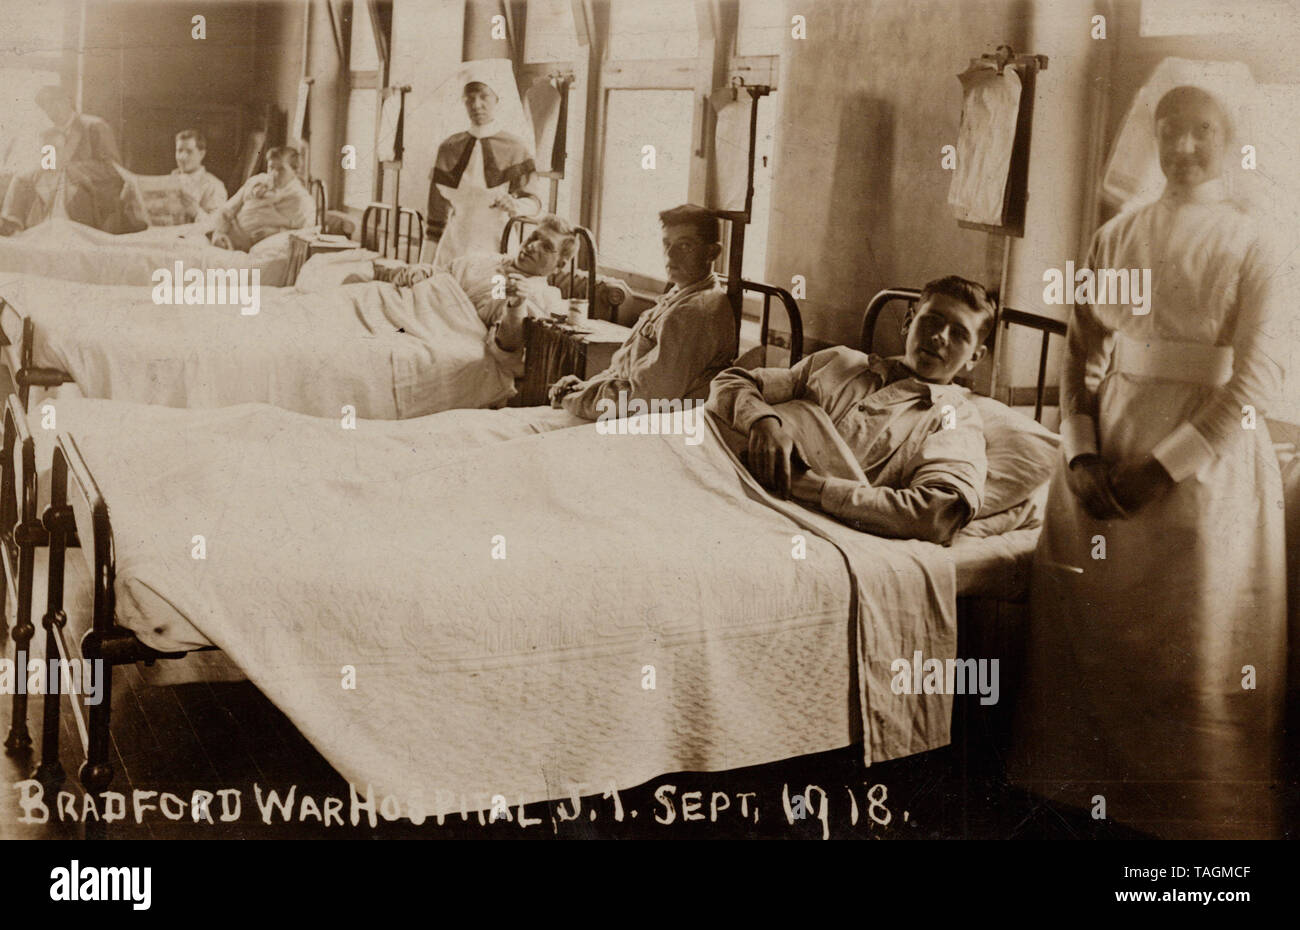 Bradford War Hospital UK, Soldiers and Nurses, c1918 postcard. Stock Photo